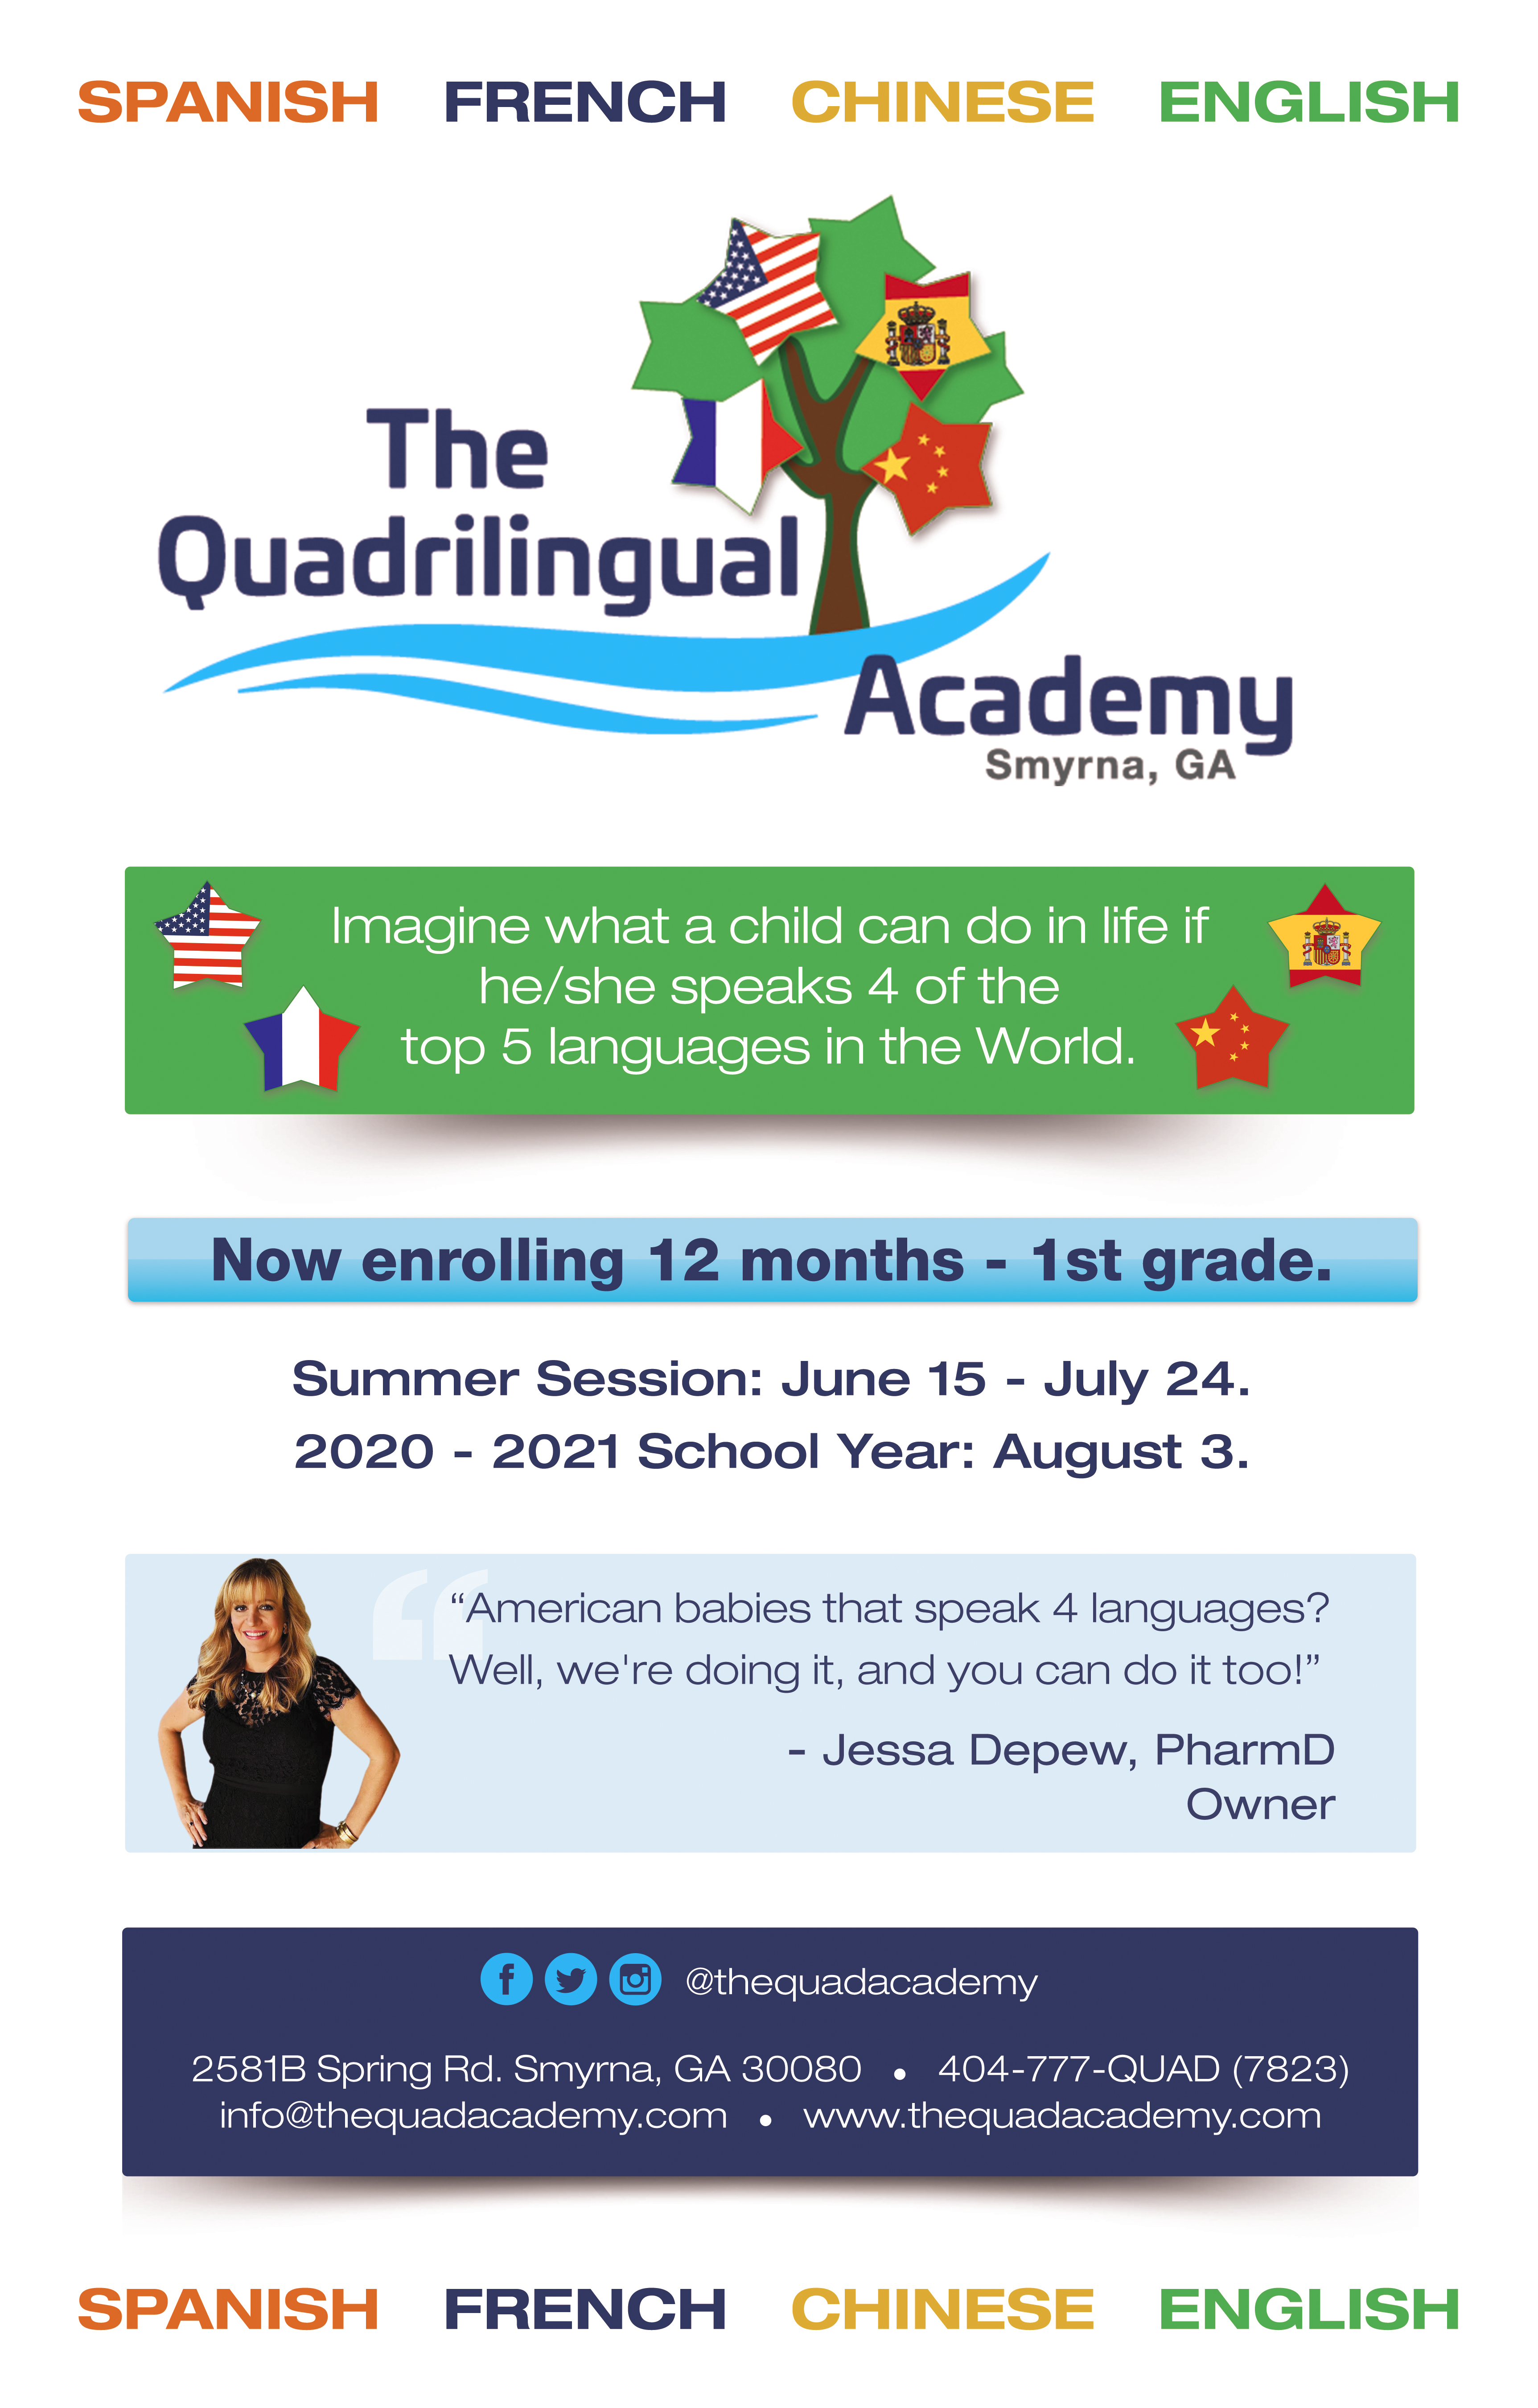 The Quadrilingual Academy Logo